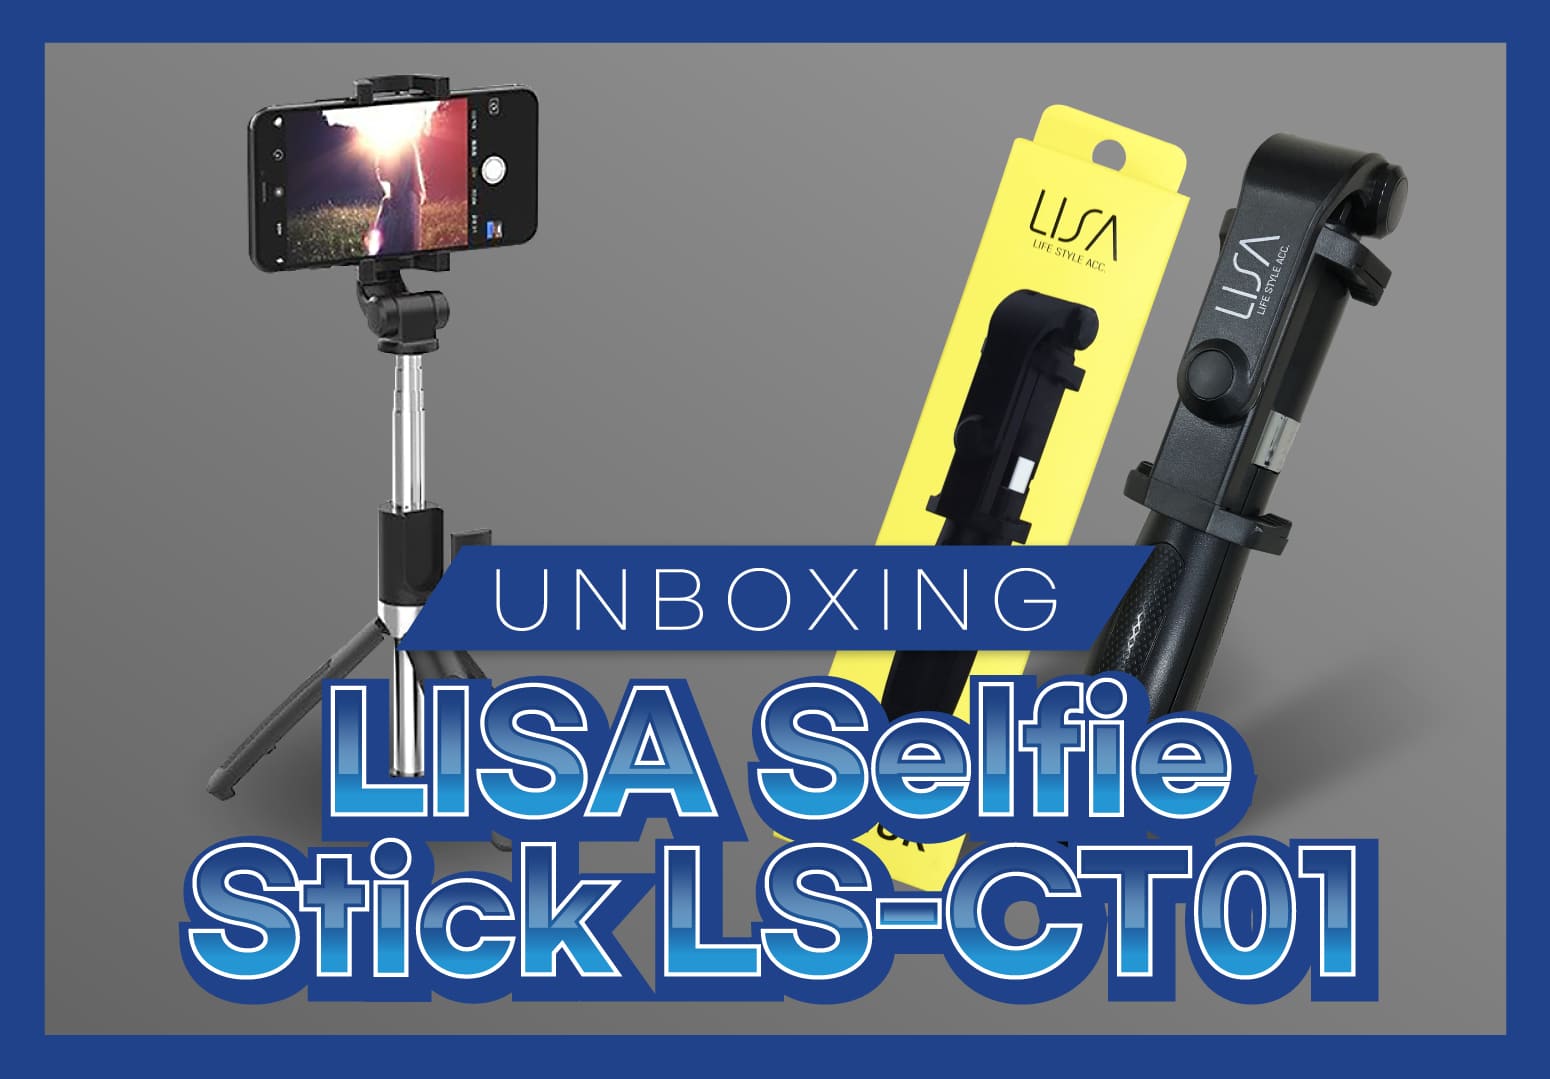 LISA Selfie Stick LS-CT01 썸네일